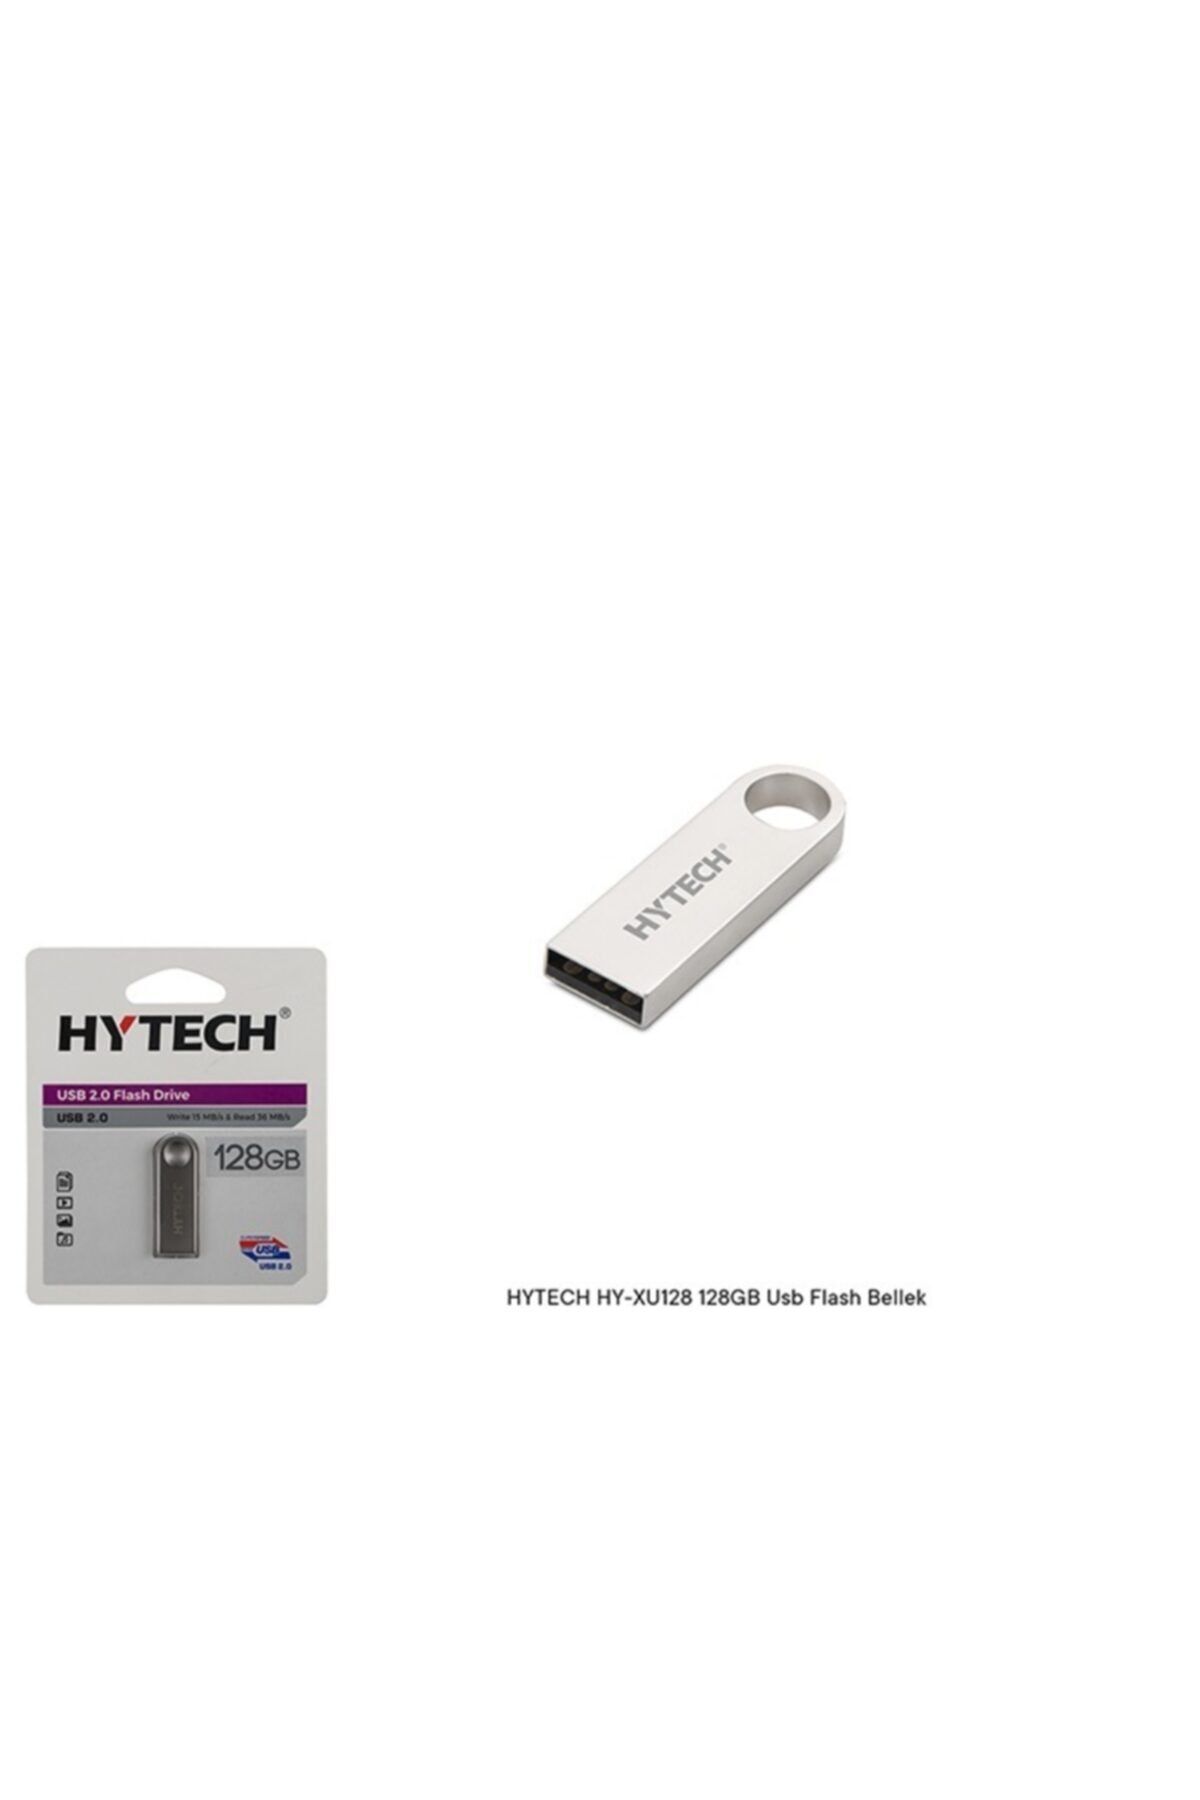 Hytech Hy-xu128 128gb Usb 2.0 Flash Bellek